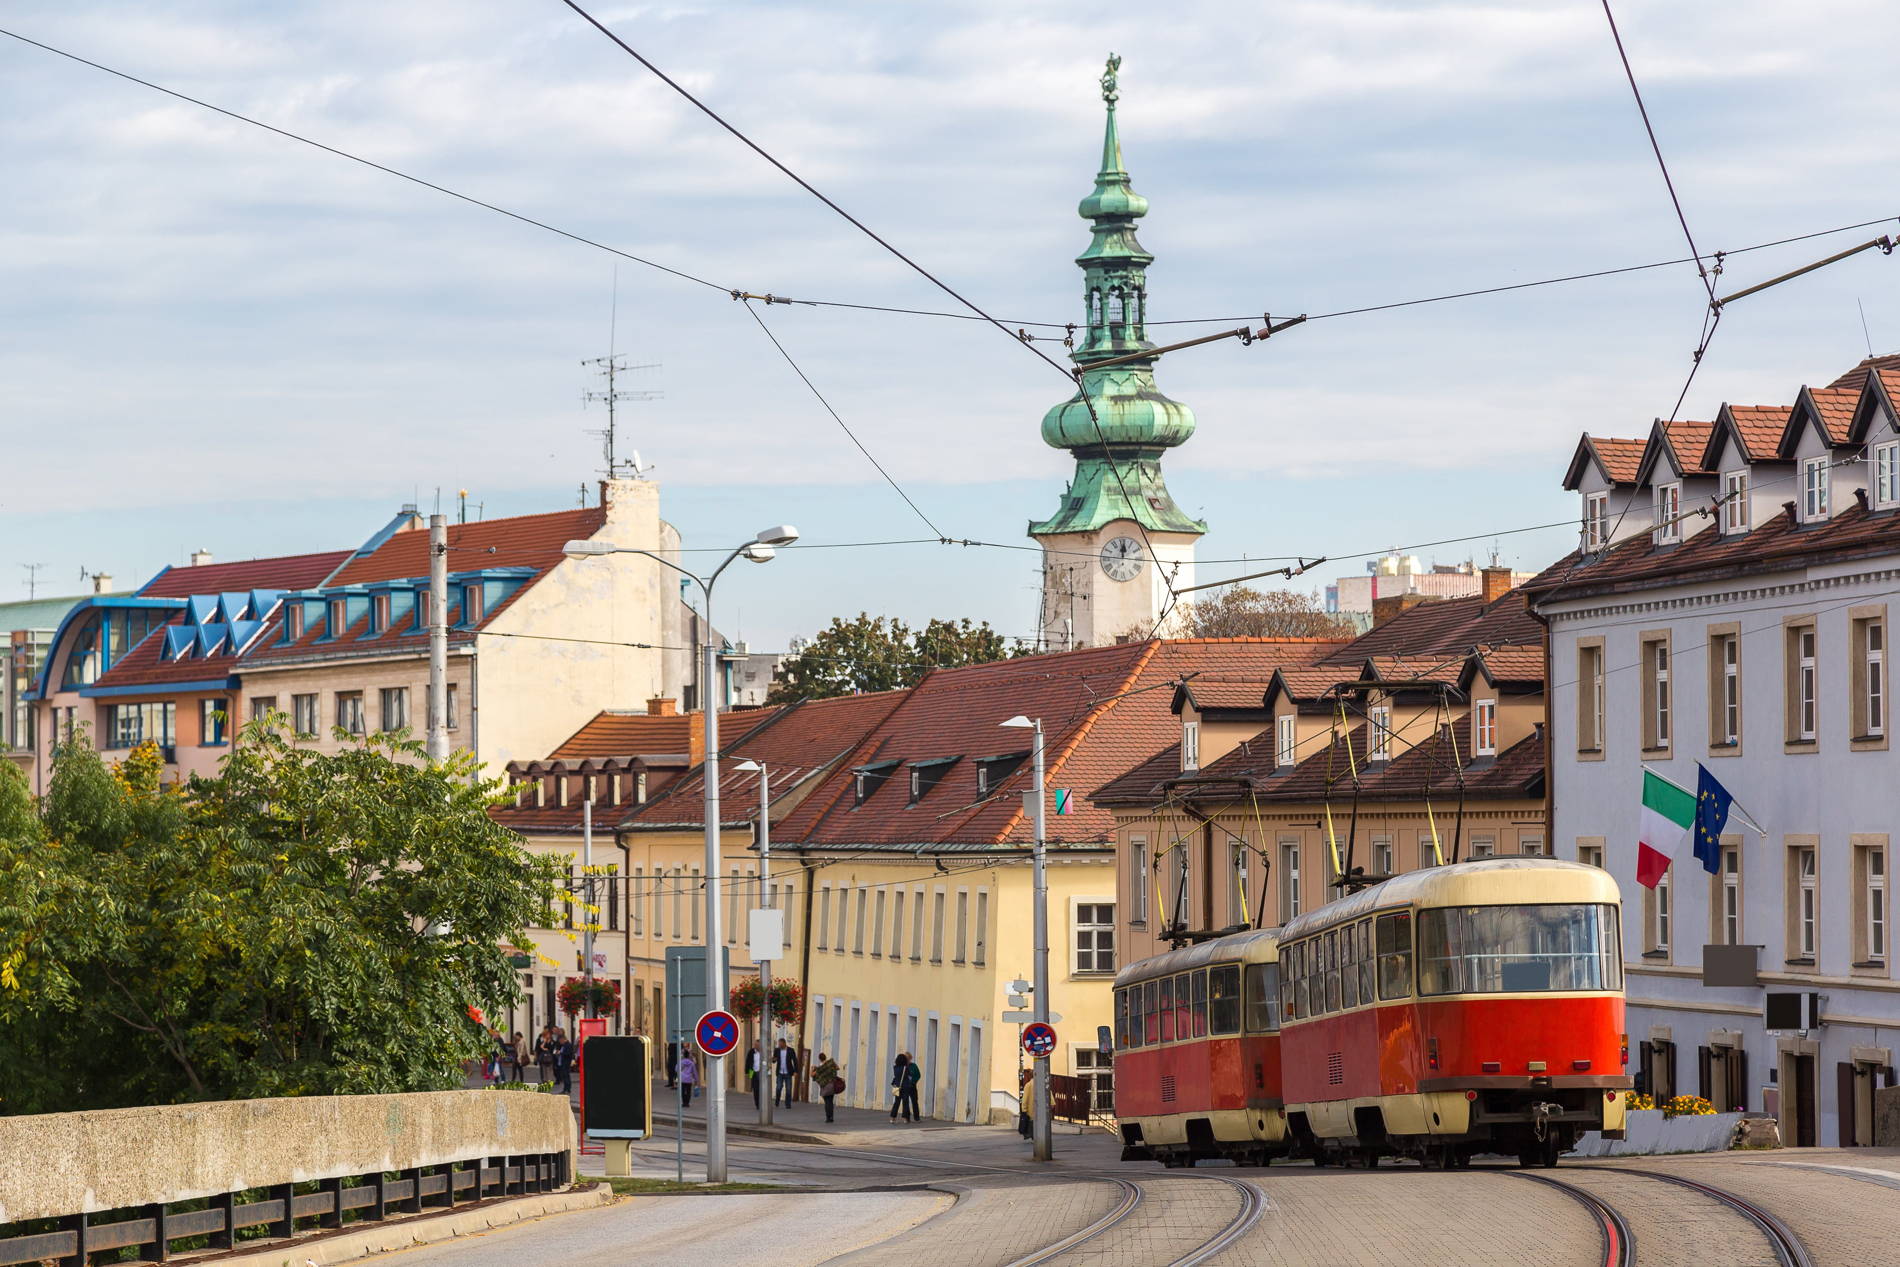 Tram in Bratislava